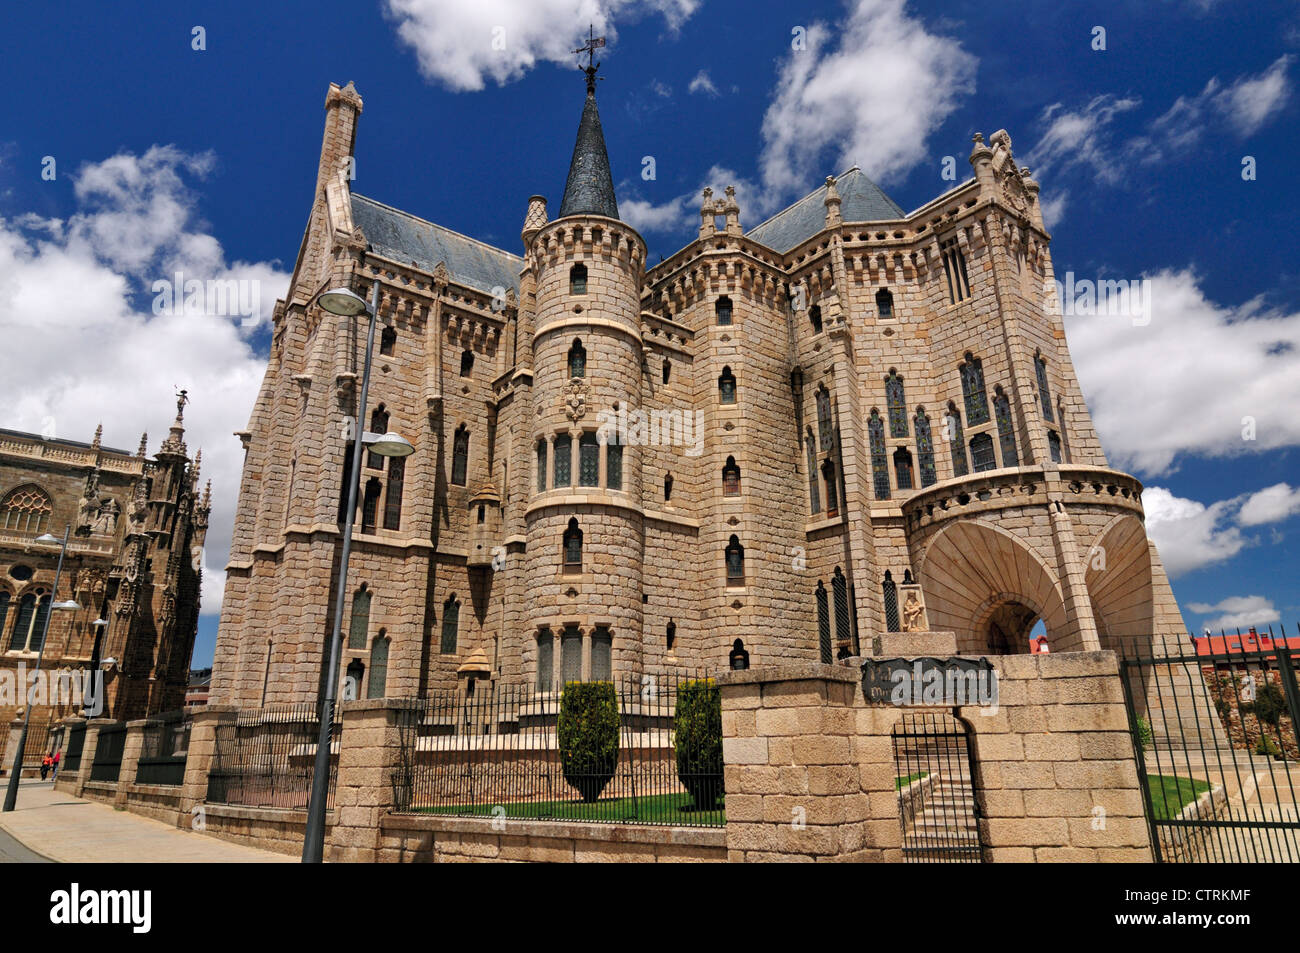 Spagna, Astorga: Palazzo del Vescovo di Antonio Gaudí Foto Stock